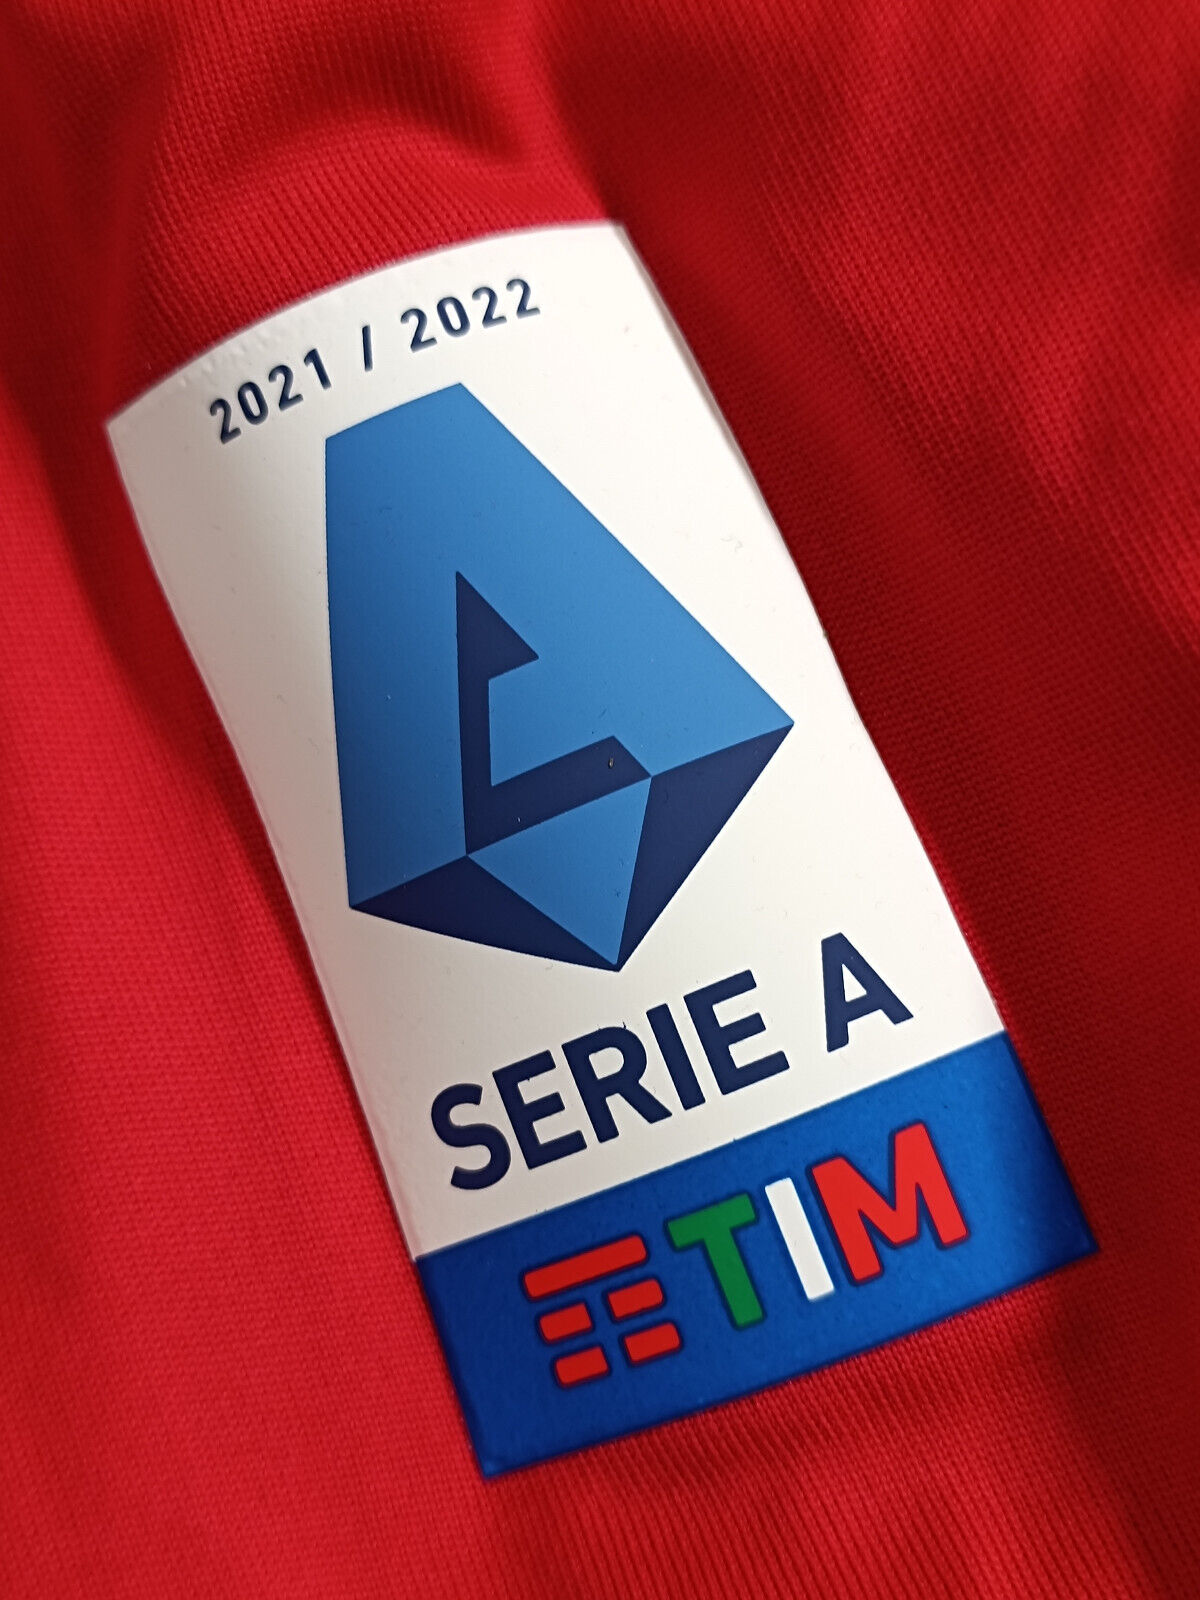 maglia calcio match issue worn AC MILAN CALABRIA 2021-22 Puma Authentic GARA